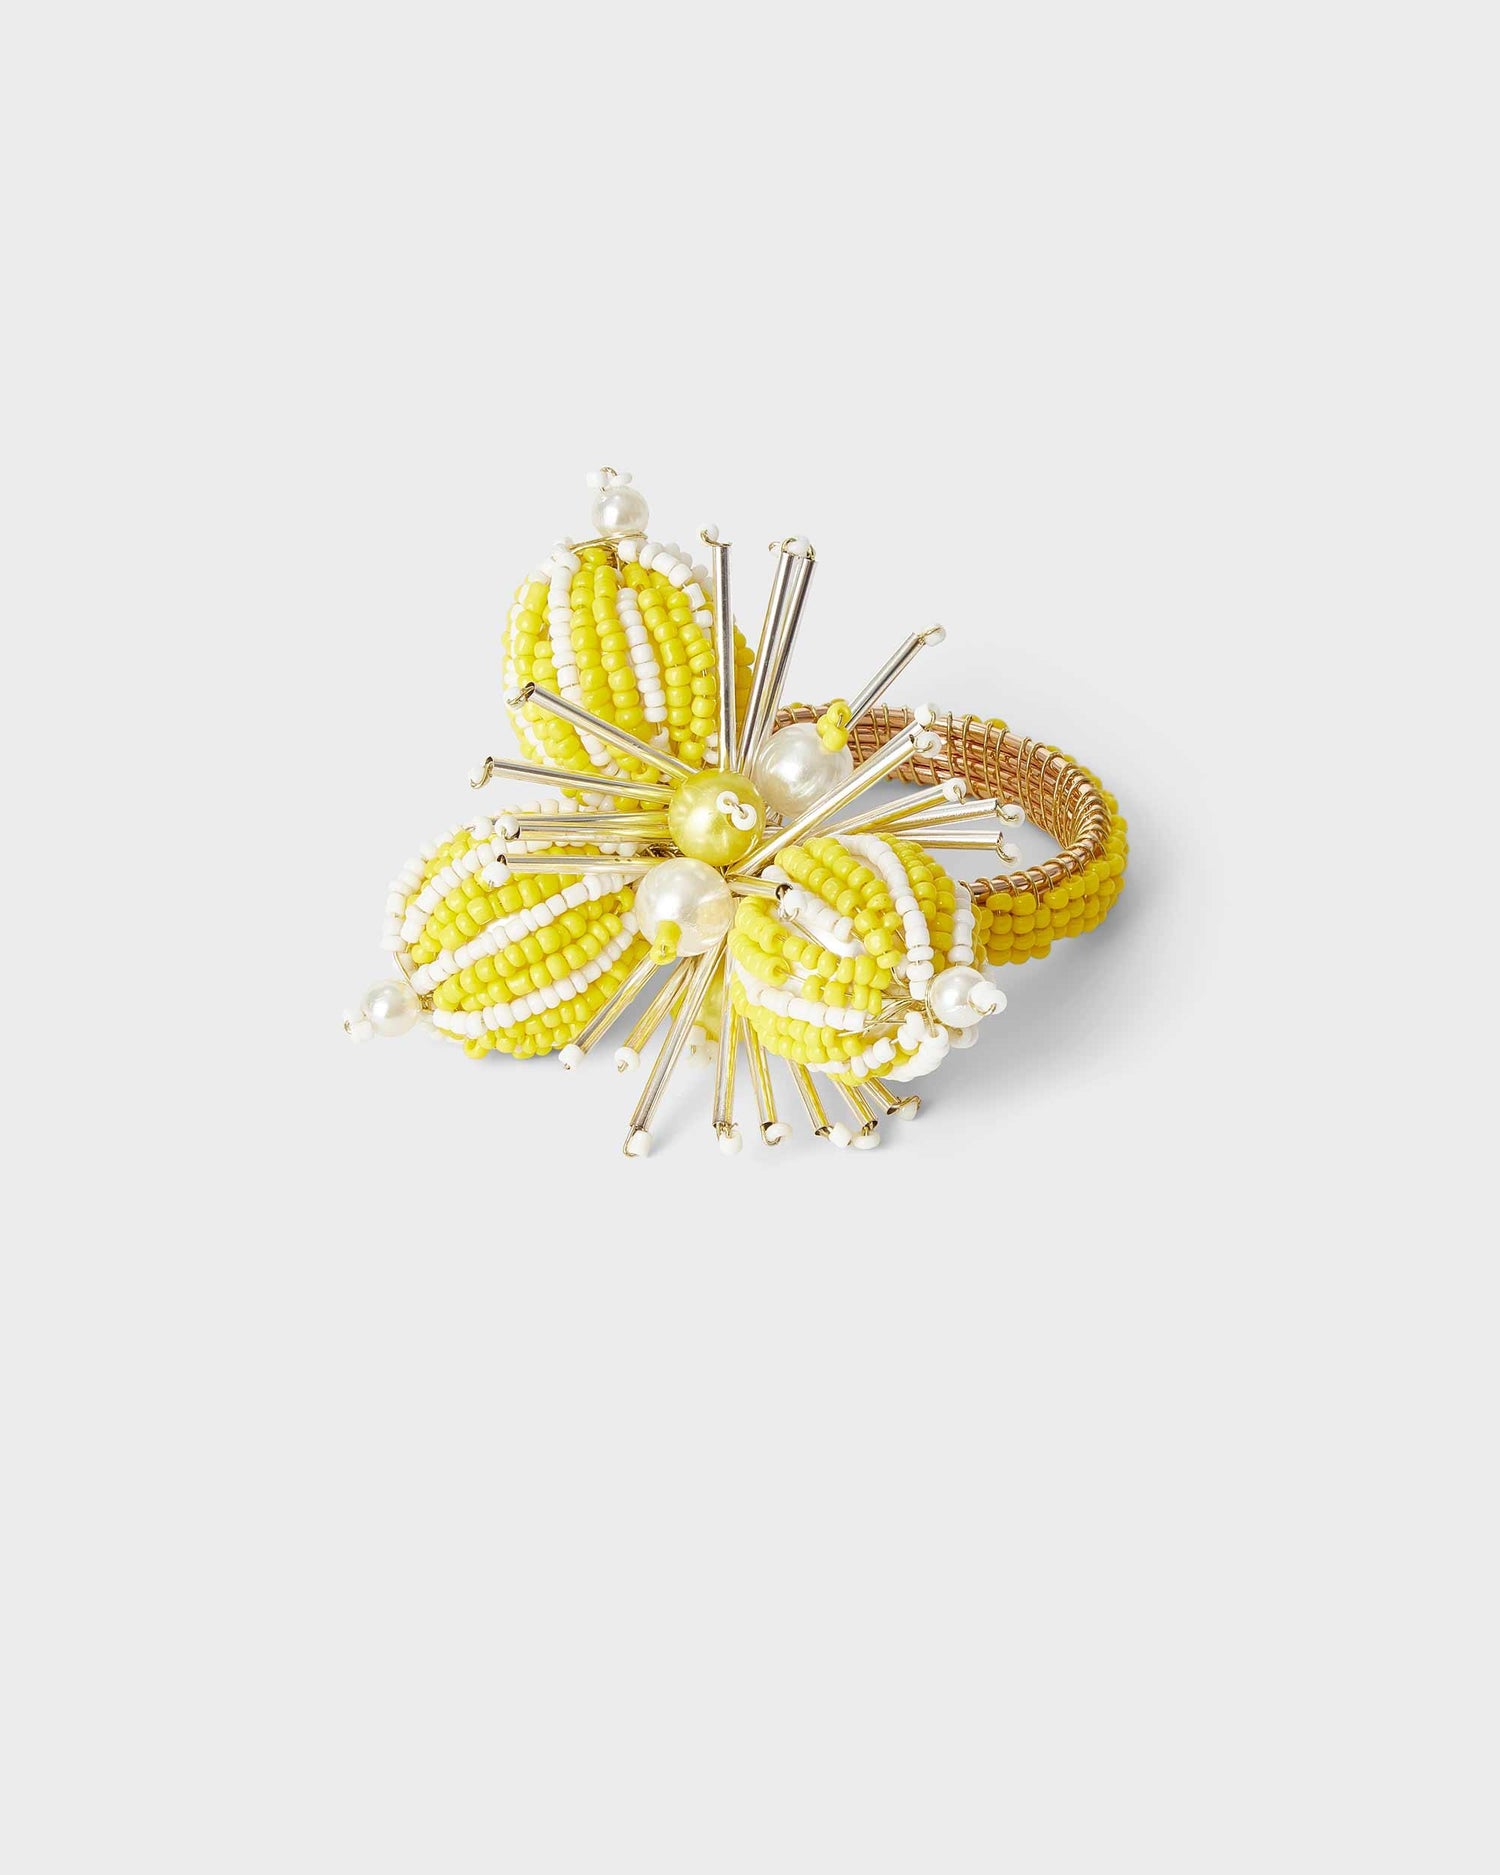 Napkin Ring - Bead ball design in Yellow - Von Home